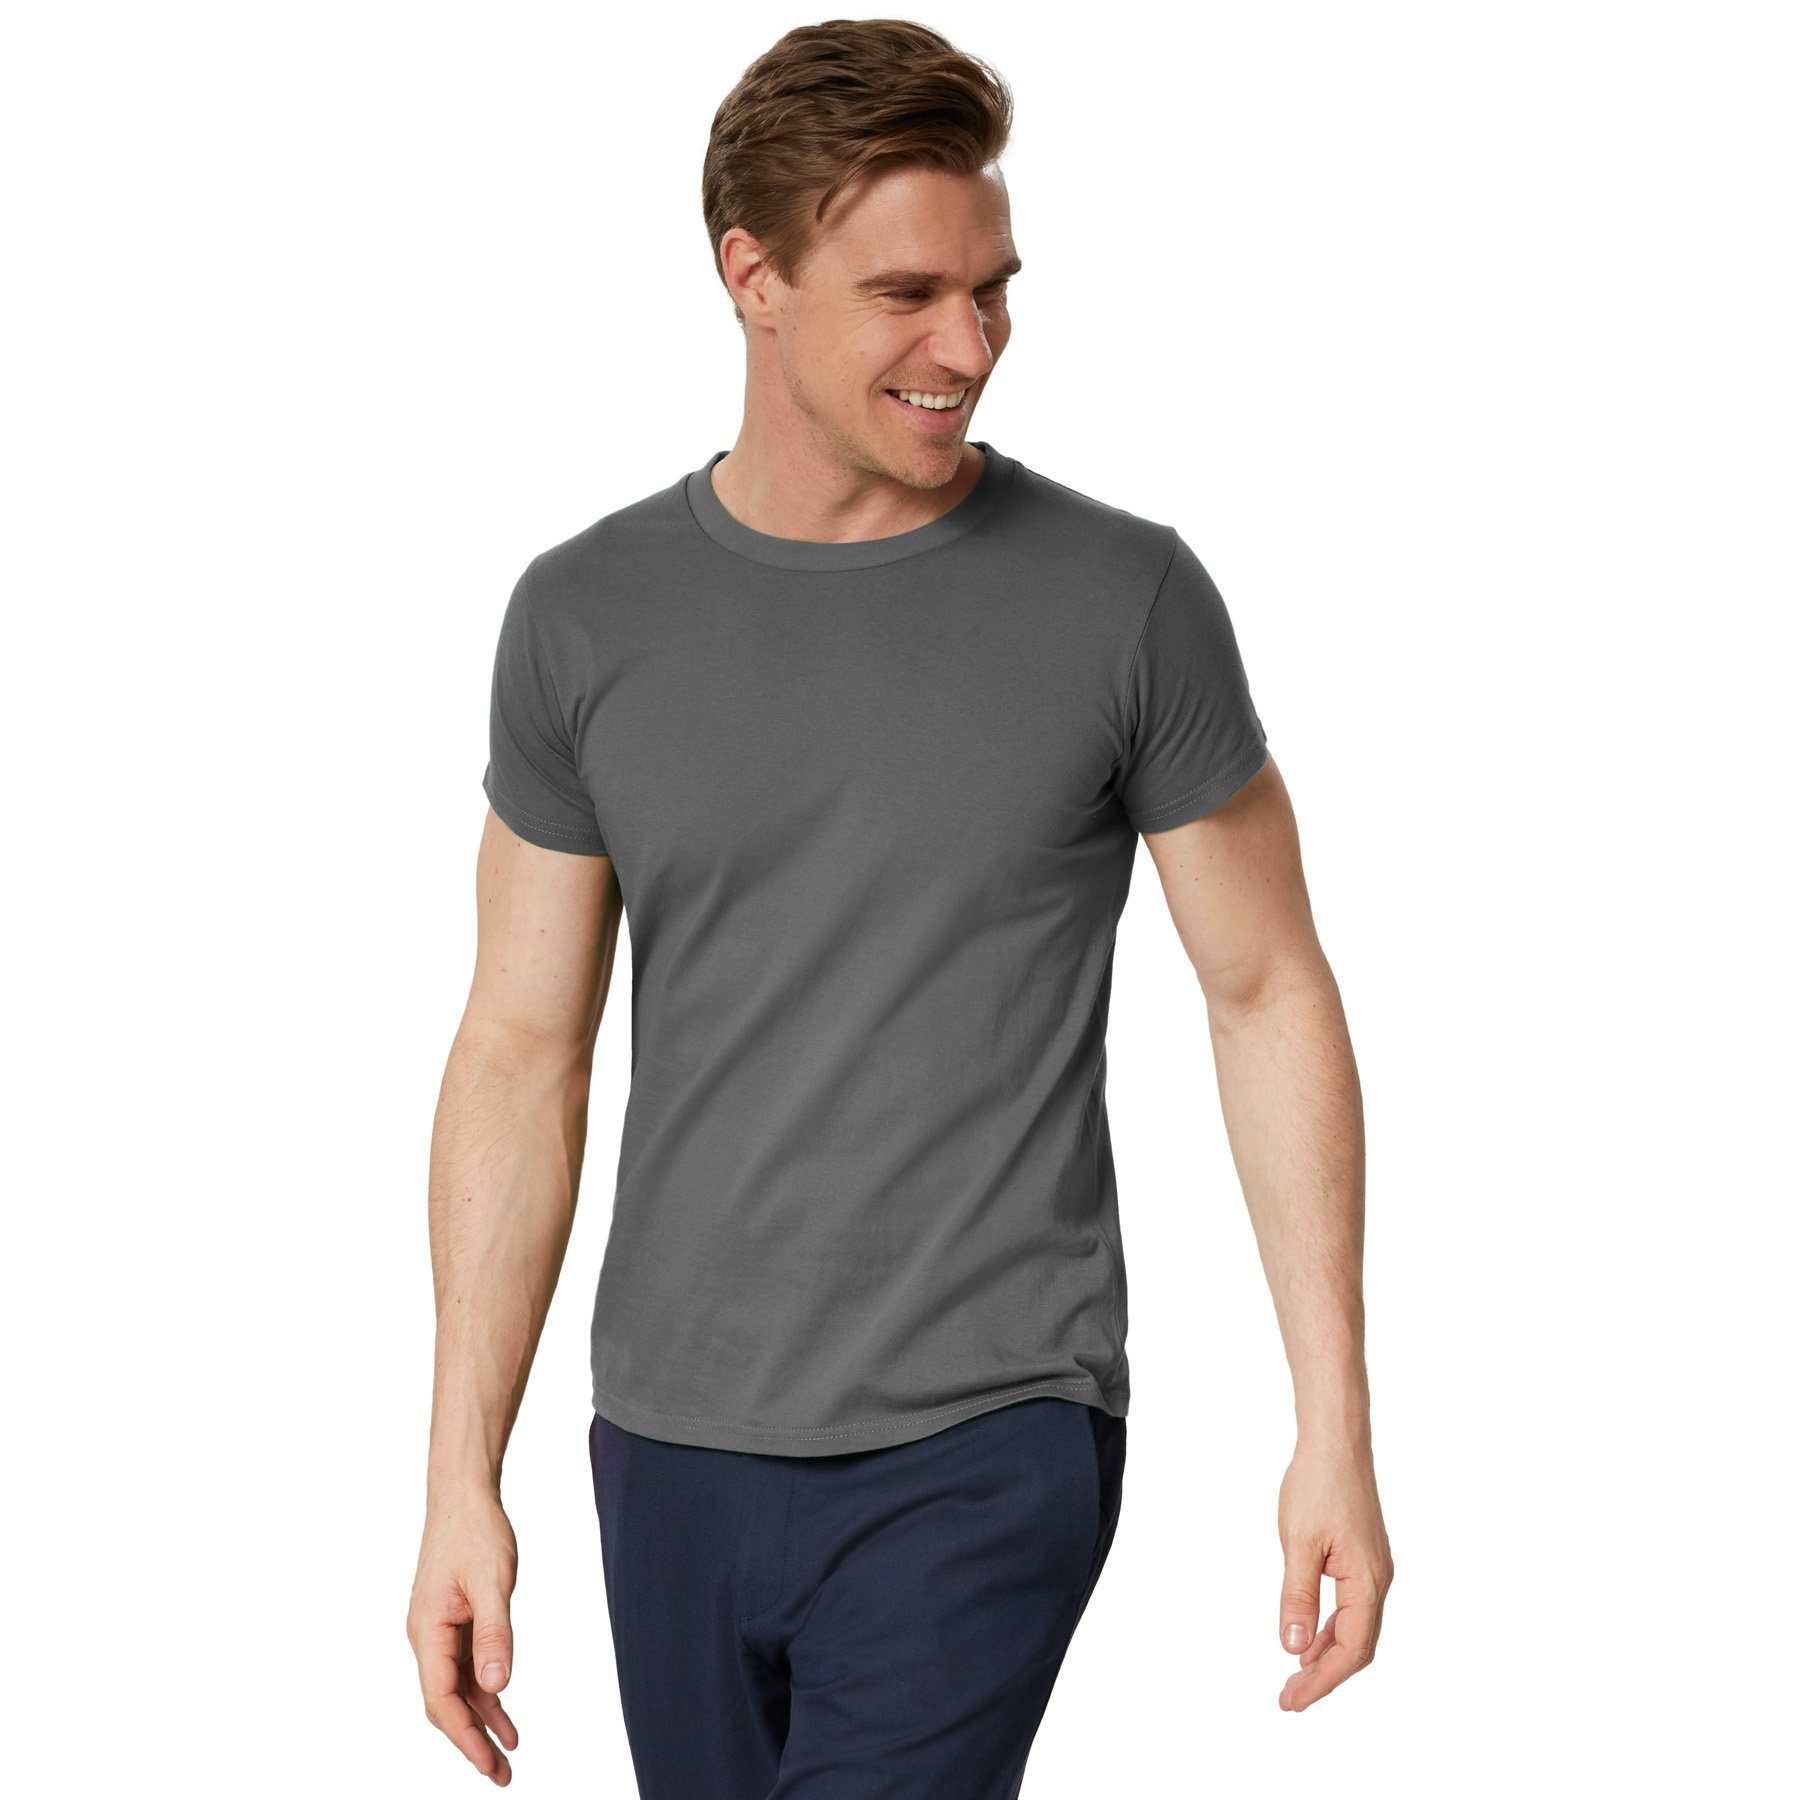 dressforfun T-Shirt T-Shirt Männer Rundhals grau